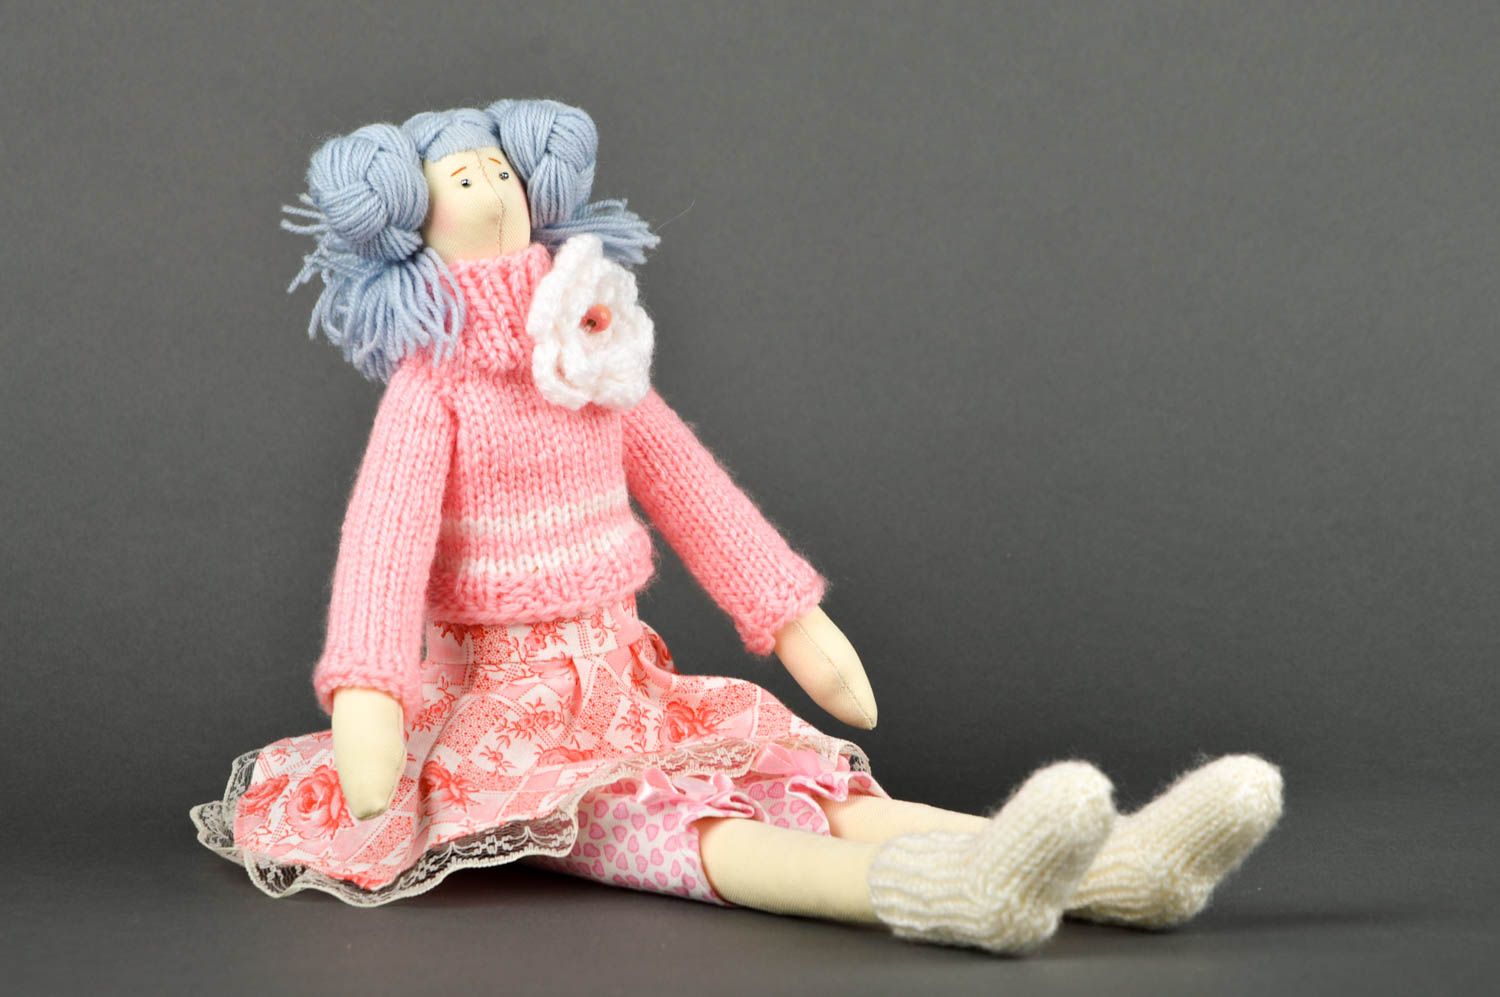 Rag doll handmade fabric toy textile toy for children nursery decor ideas photo 2